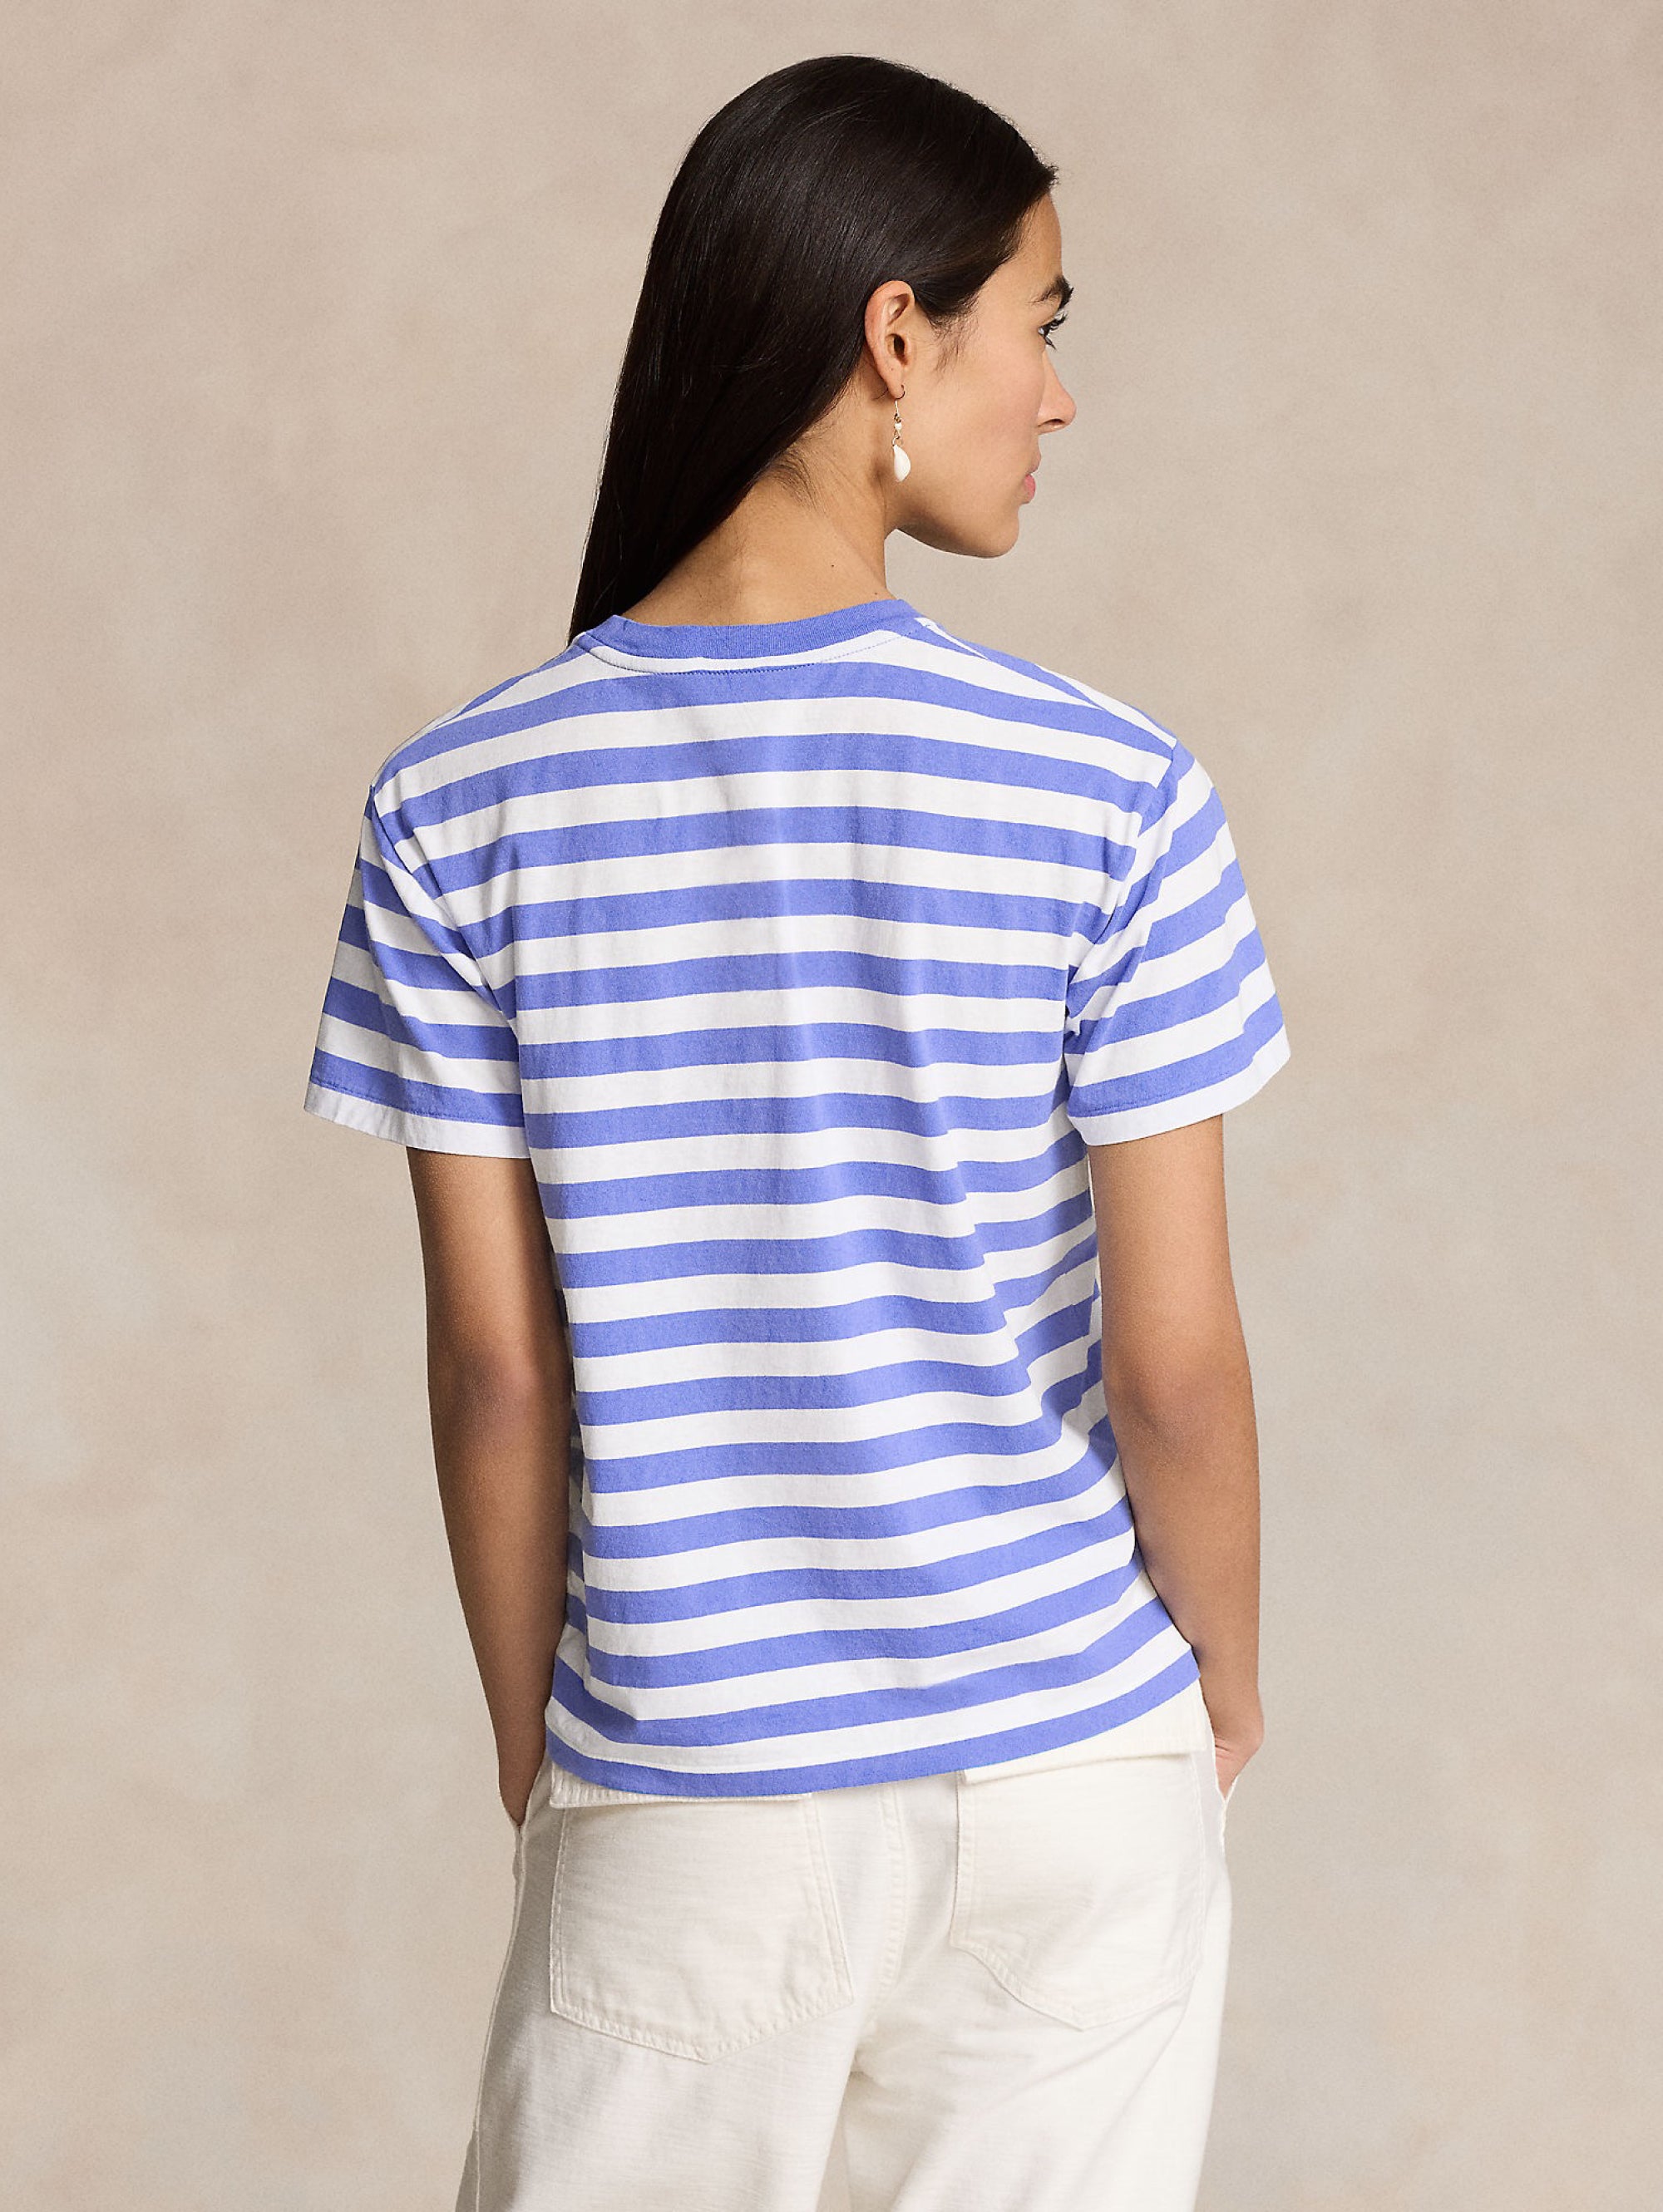 Striped T-shirt with White/Blue Polo Bear Print